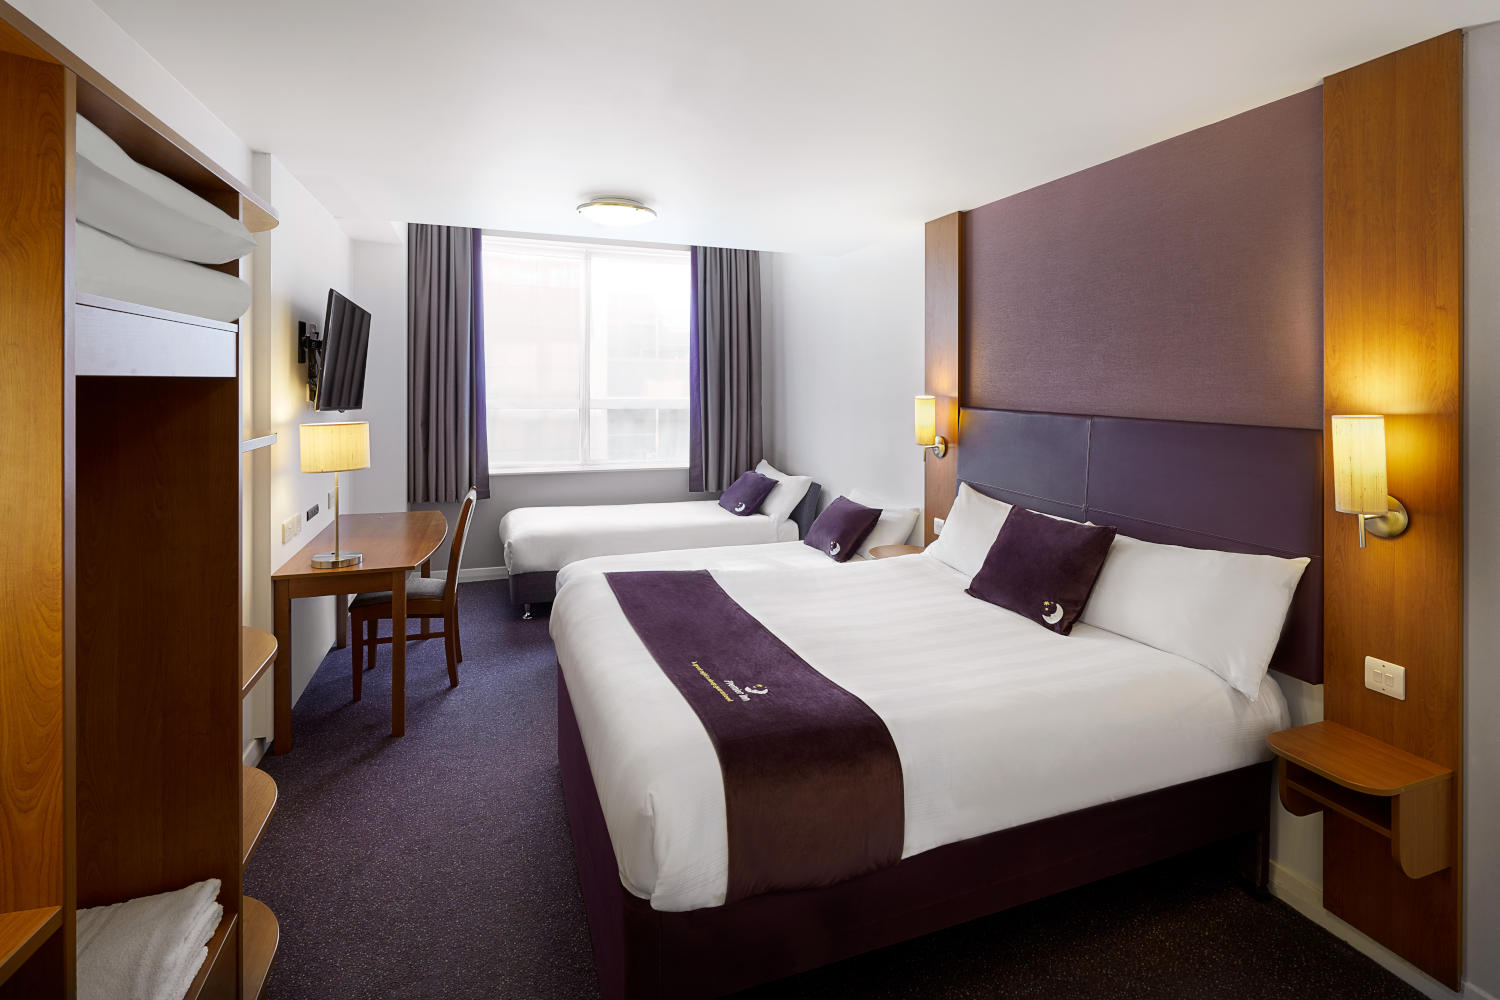 Premier Inn bedroom Premier Inn Bradford North (Bingley) hotel Keighley 03337 773937